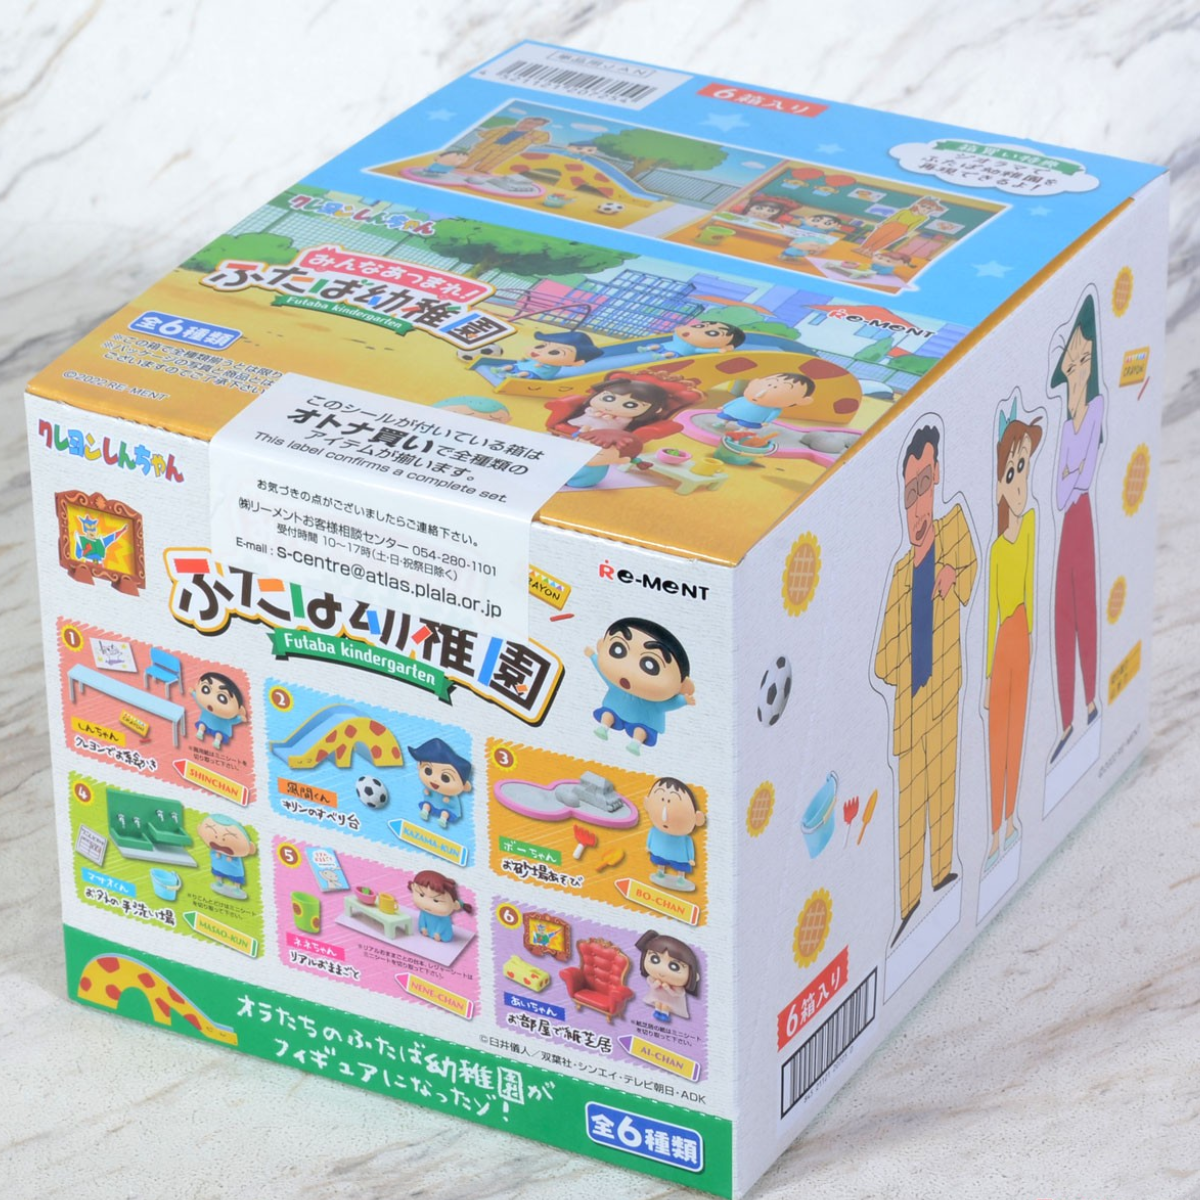 Re-Ment Crayon Shinchan Kindergarten-Single Box (Random)-Re-Ment-Ace Cards & Collectibles